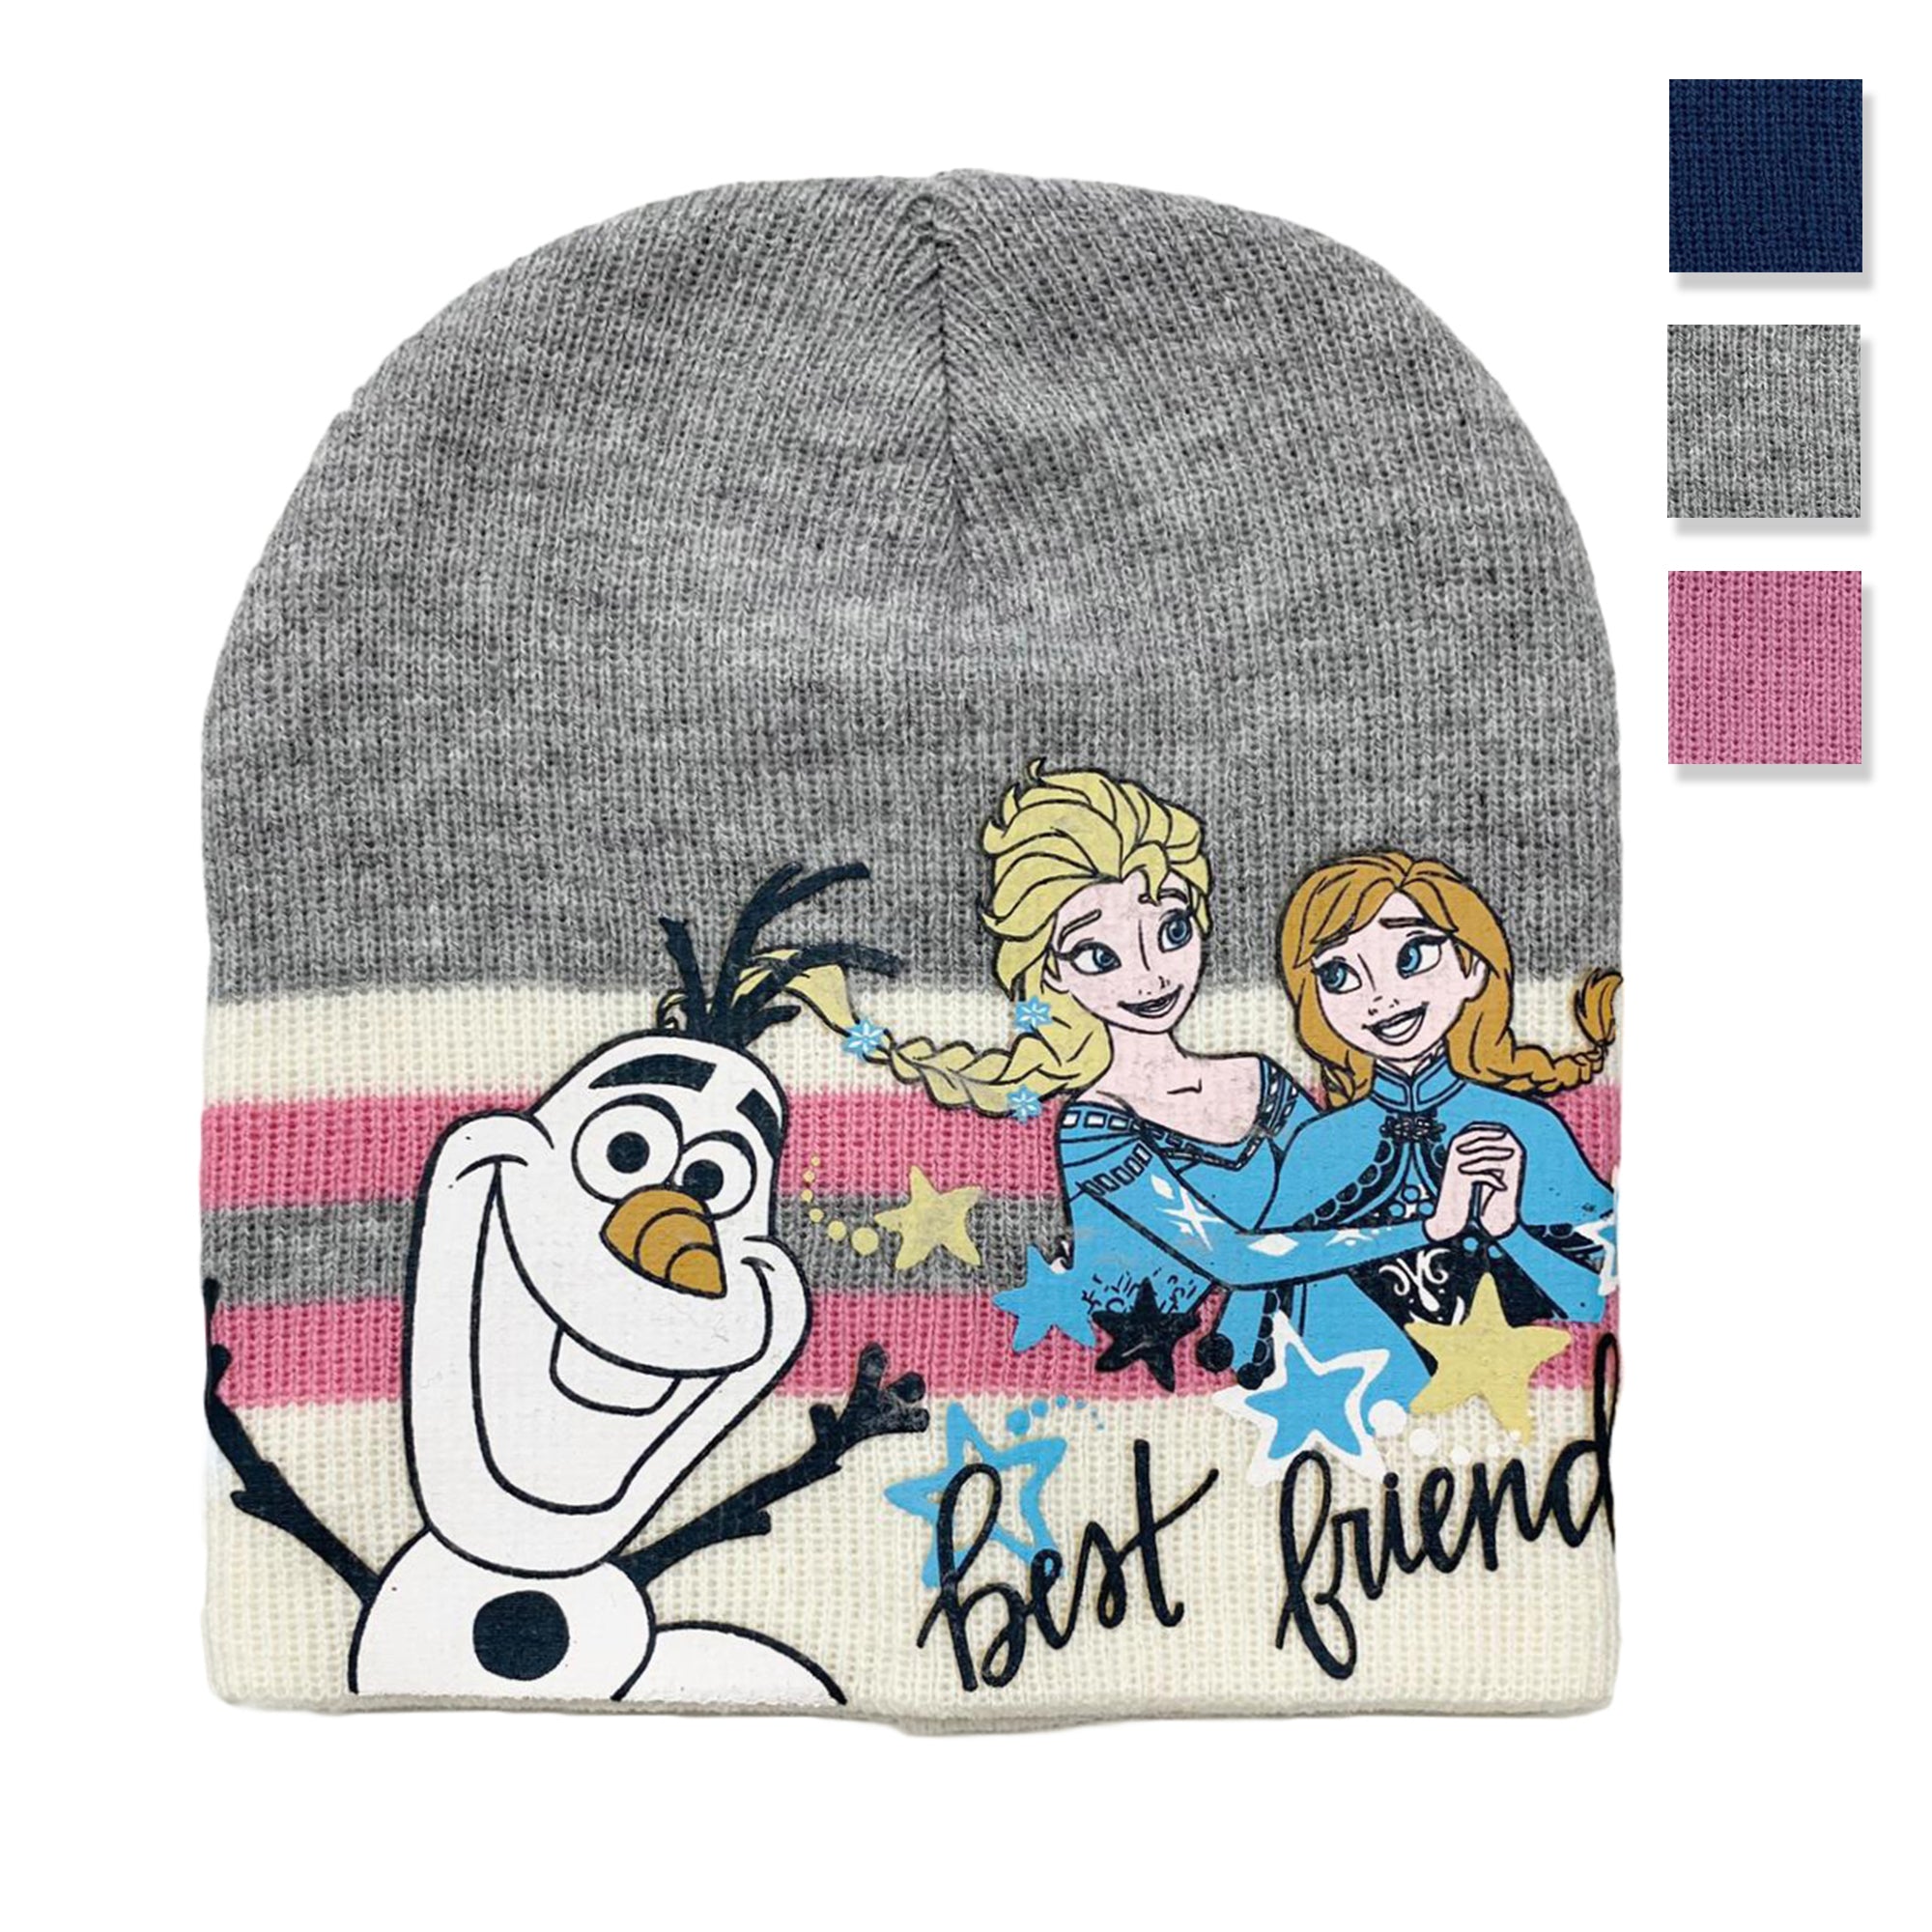 Cappello invernale Disney Frozen Olaf Anna e Elsa cappellino bambina 3399